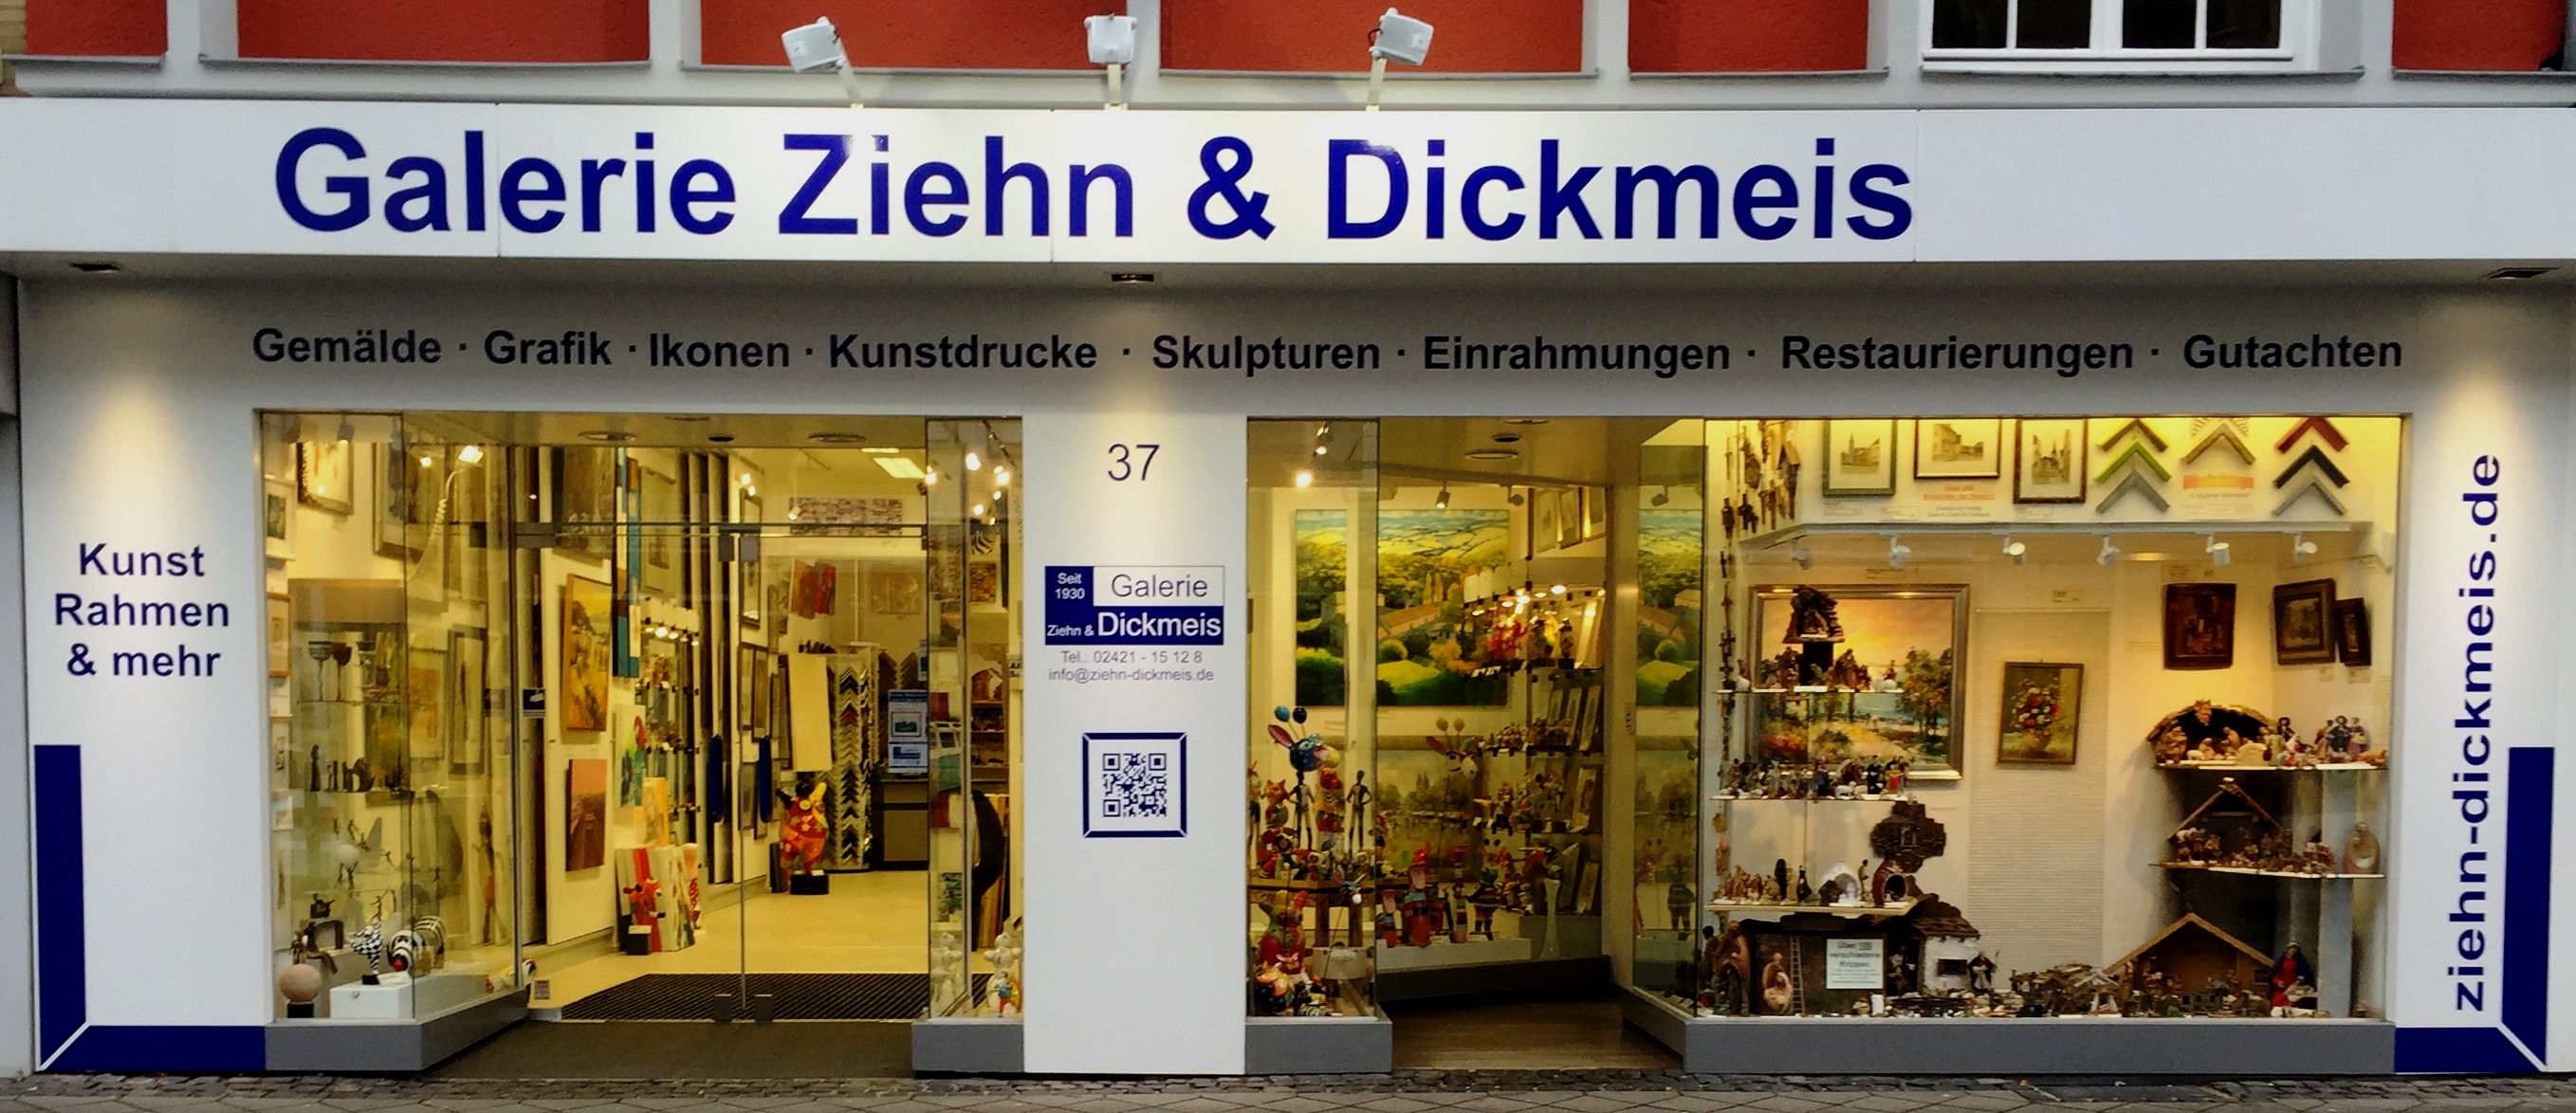 Galerie Ziehn & Dickmeis